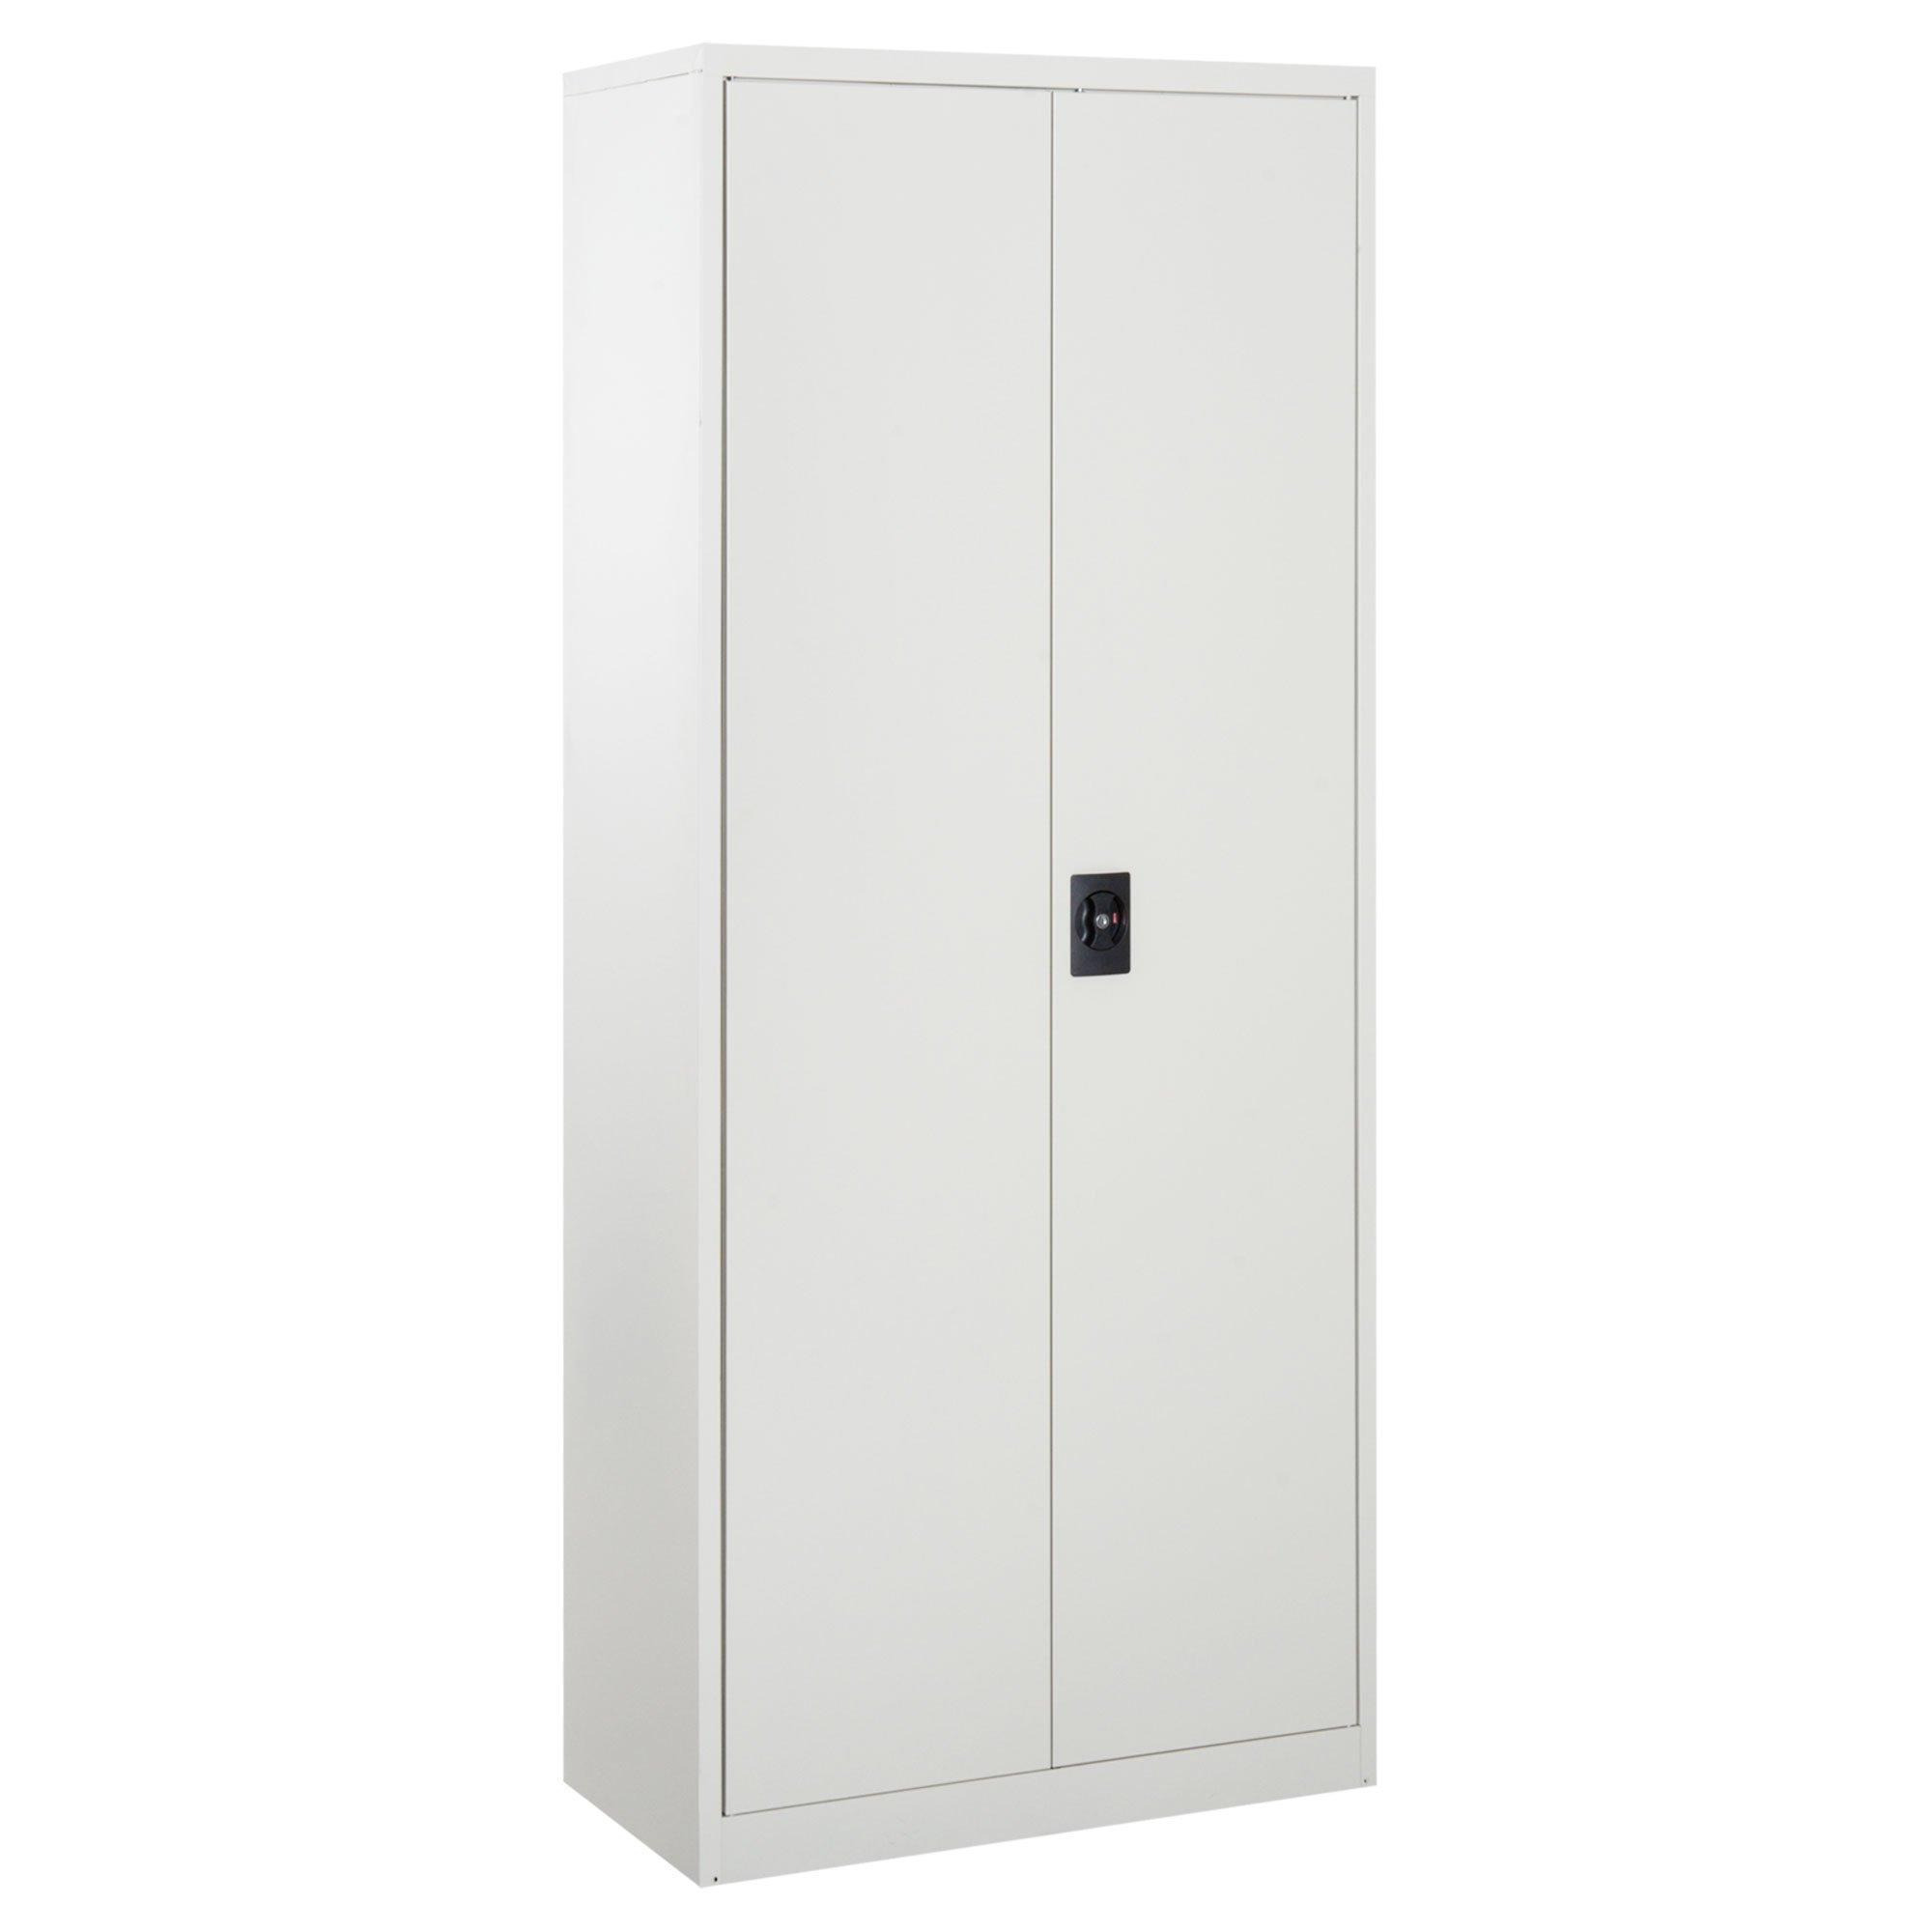 Filing Cabinet Storage Unit 2 Doors 5 Compartments Adjustable Shelf - image 1